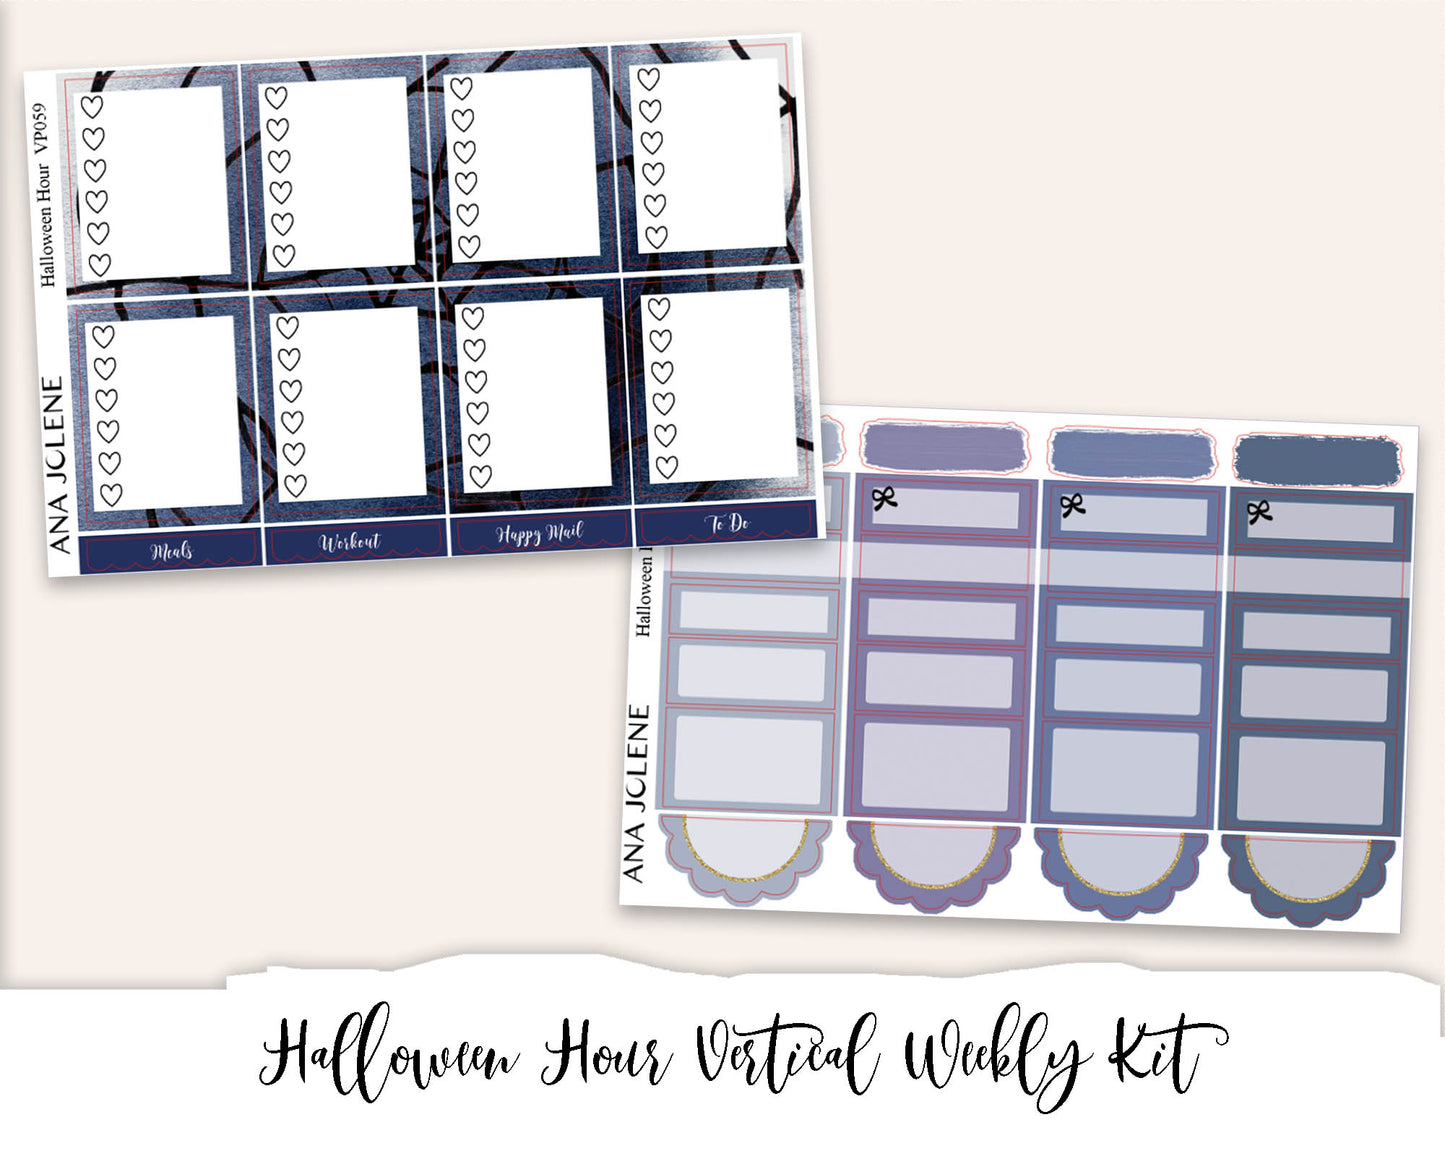 HALLOWEEN HOUR Planner Sticker Kit (Vertical Weekly)